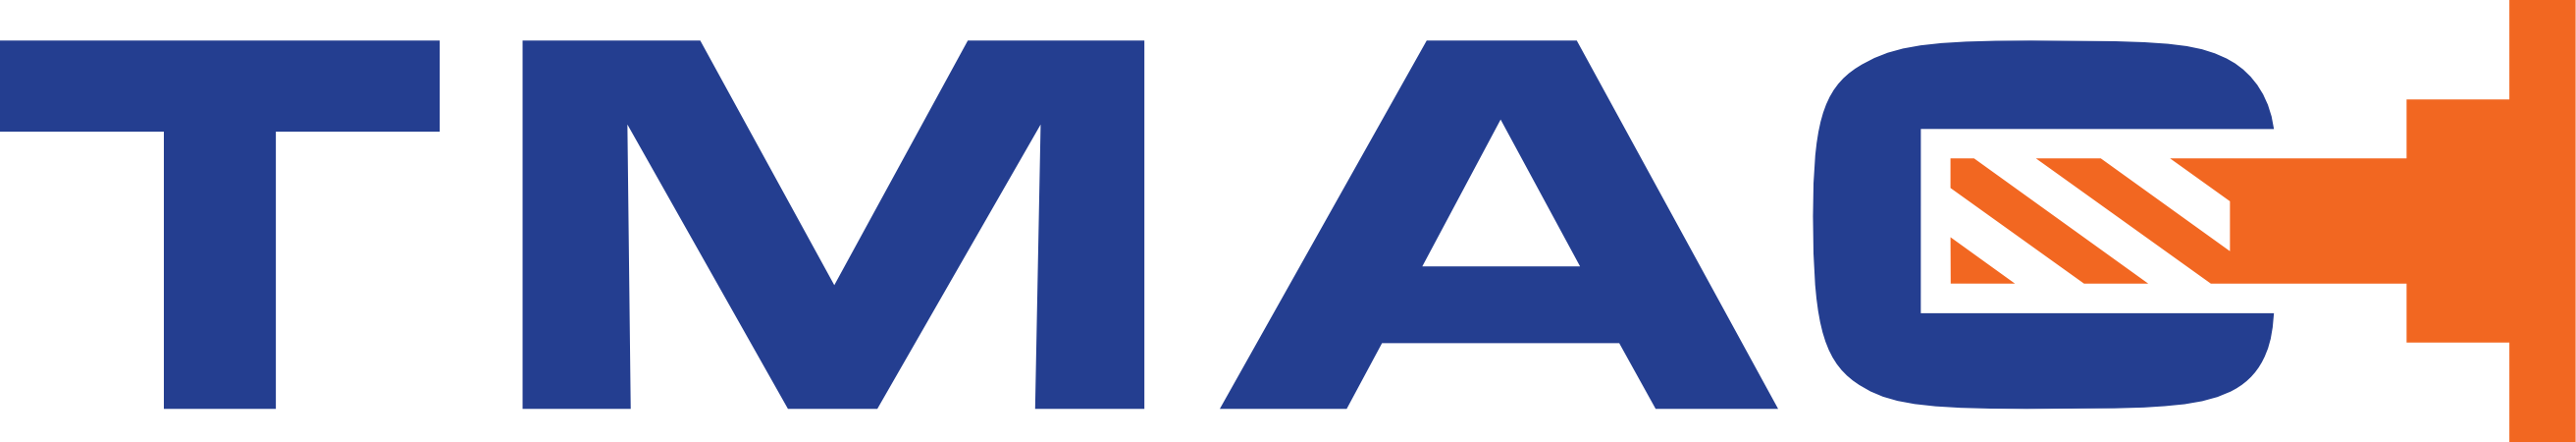 TMAC logo by Caron Engineering